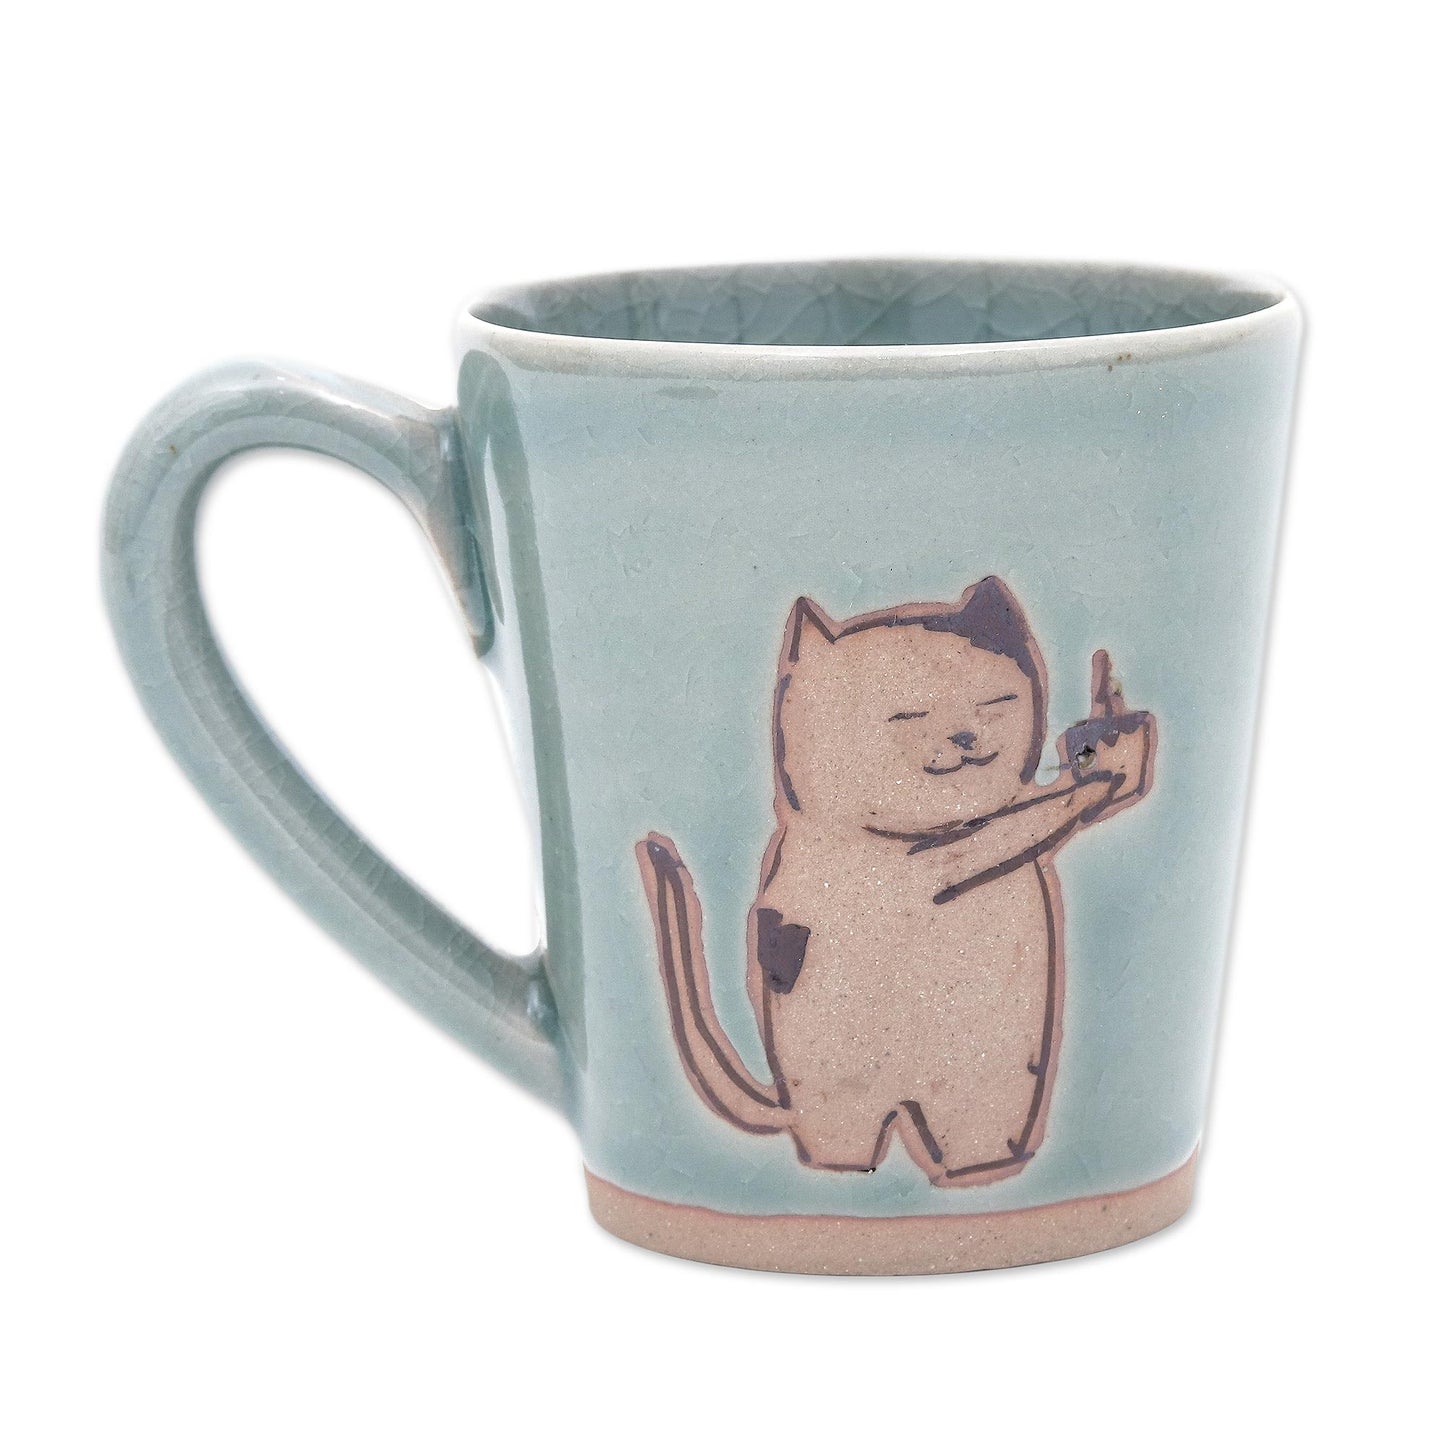 Just For You Adorable Celadon Ceramic Kitty Mug